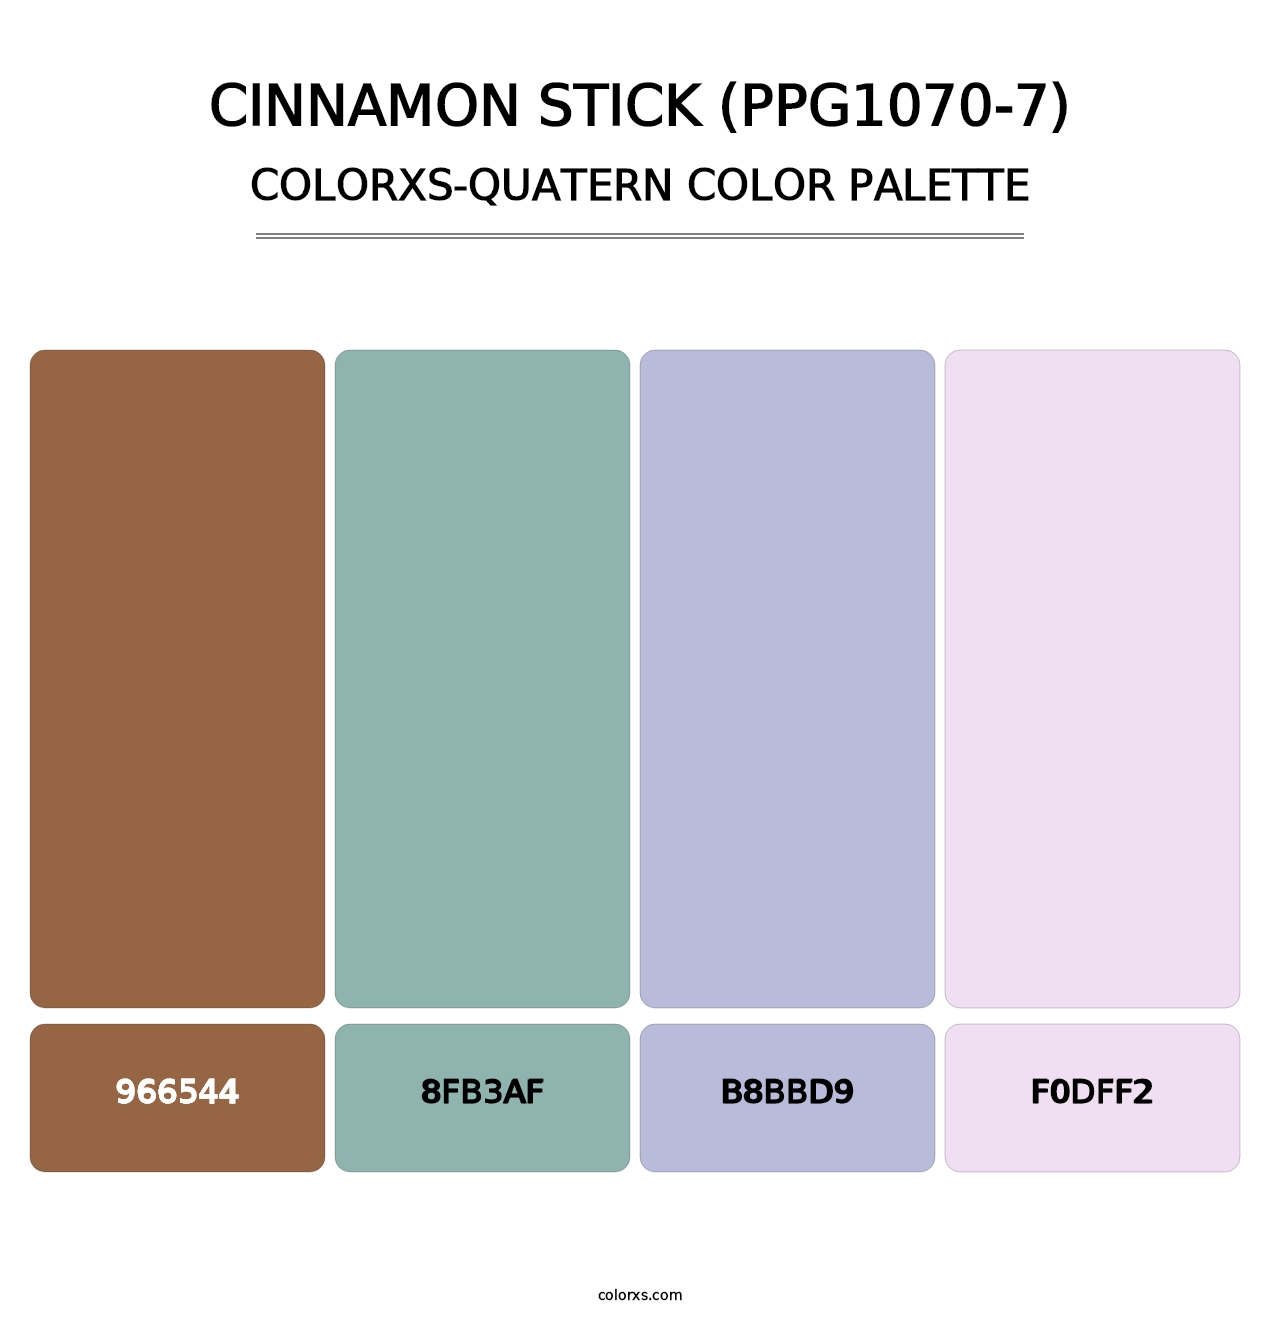 Cinnamon Stick (PPG1070-7) - Colorxs Quatern Palette